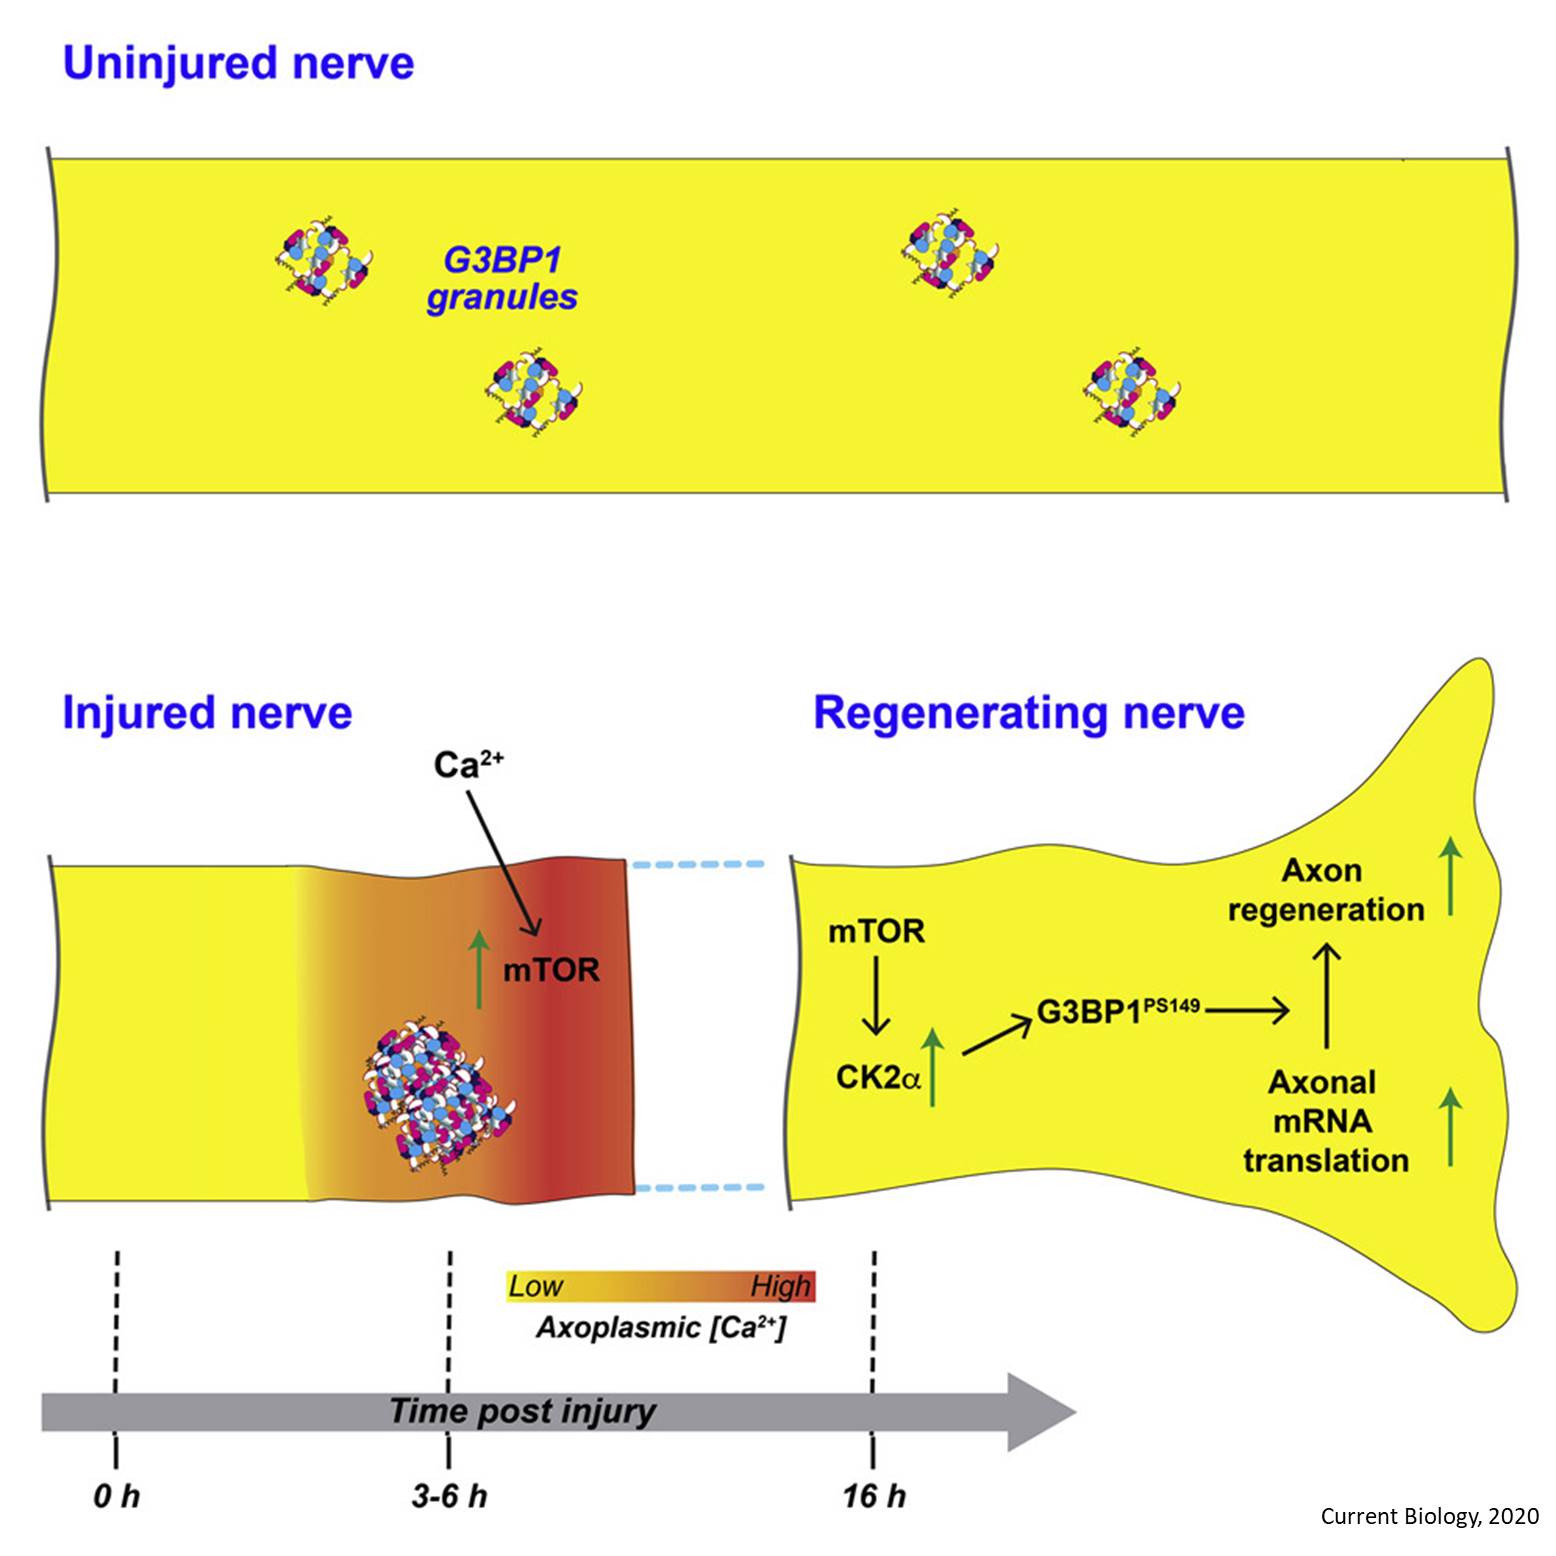 Speeding-up nerve regeneration after injury!